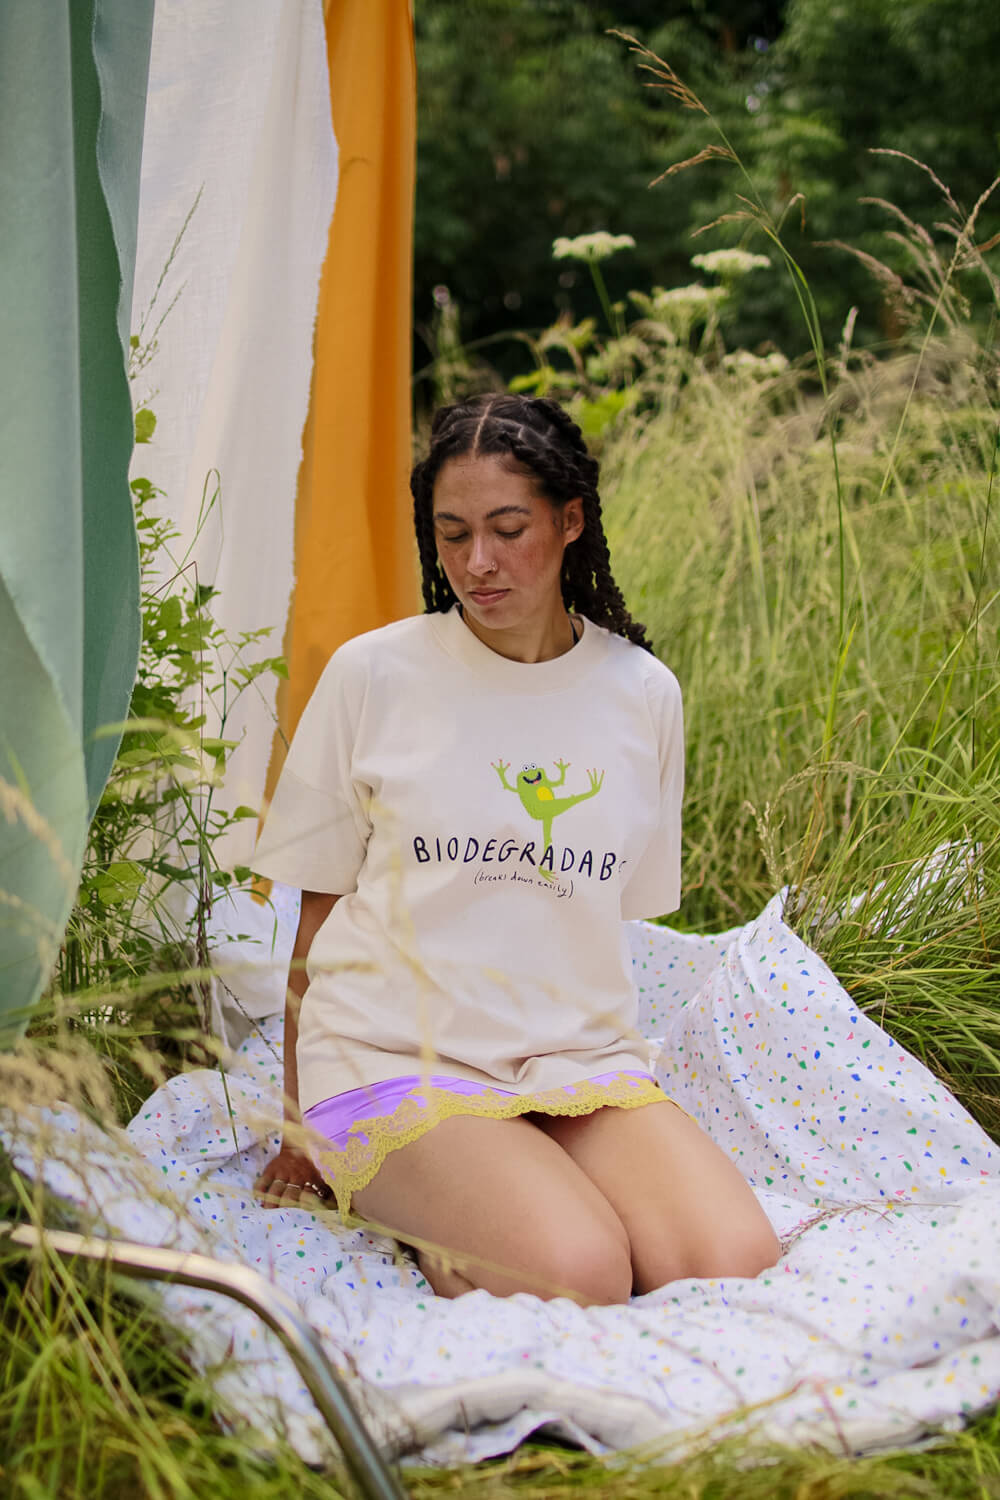 Biodegradable Oversized T-shirt